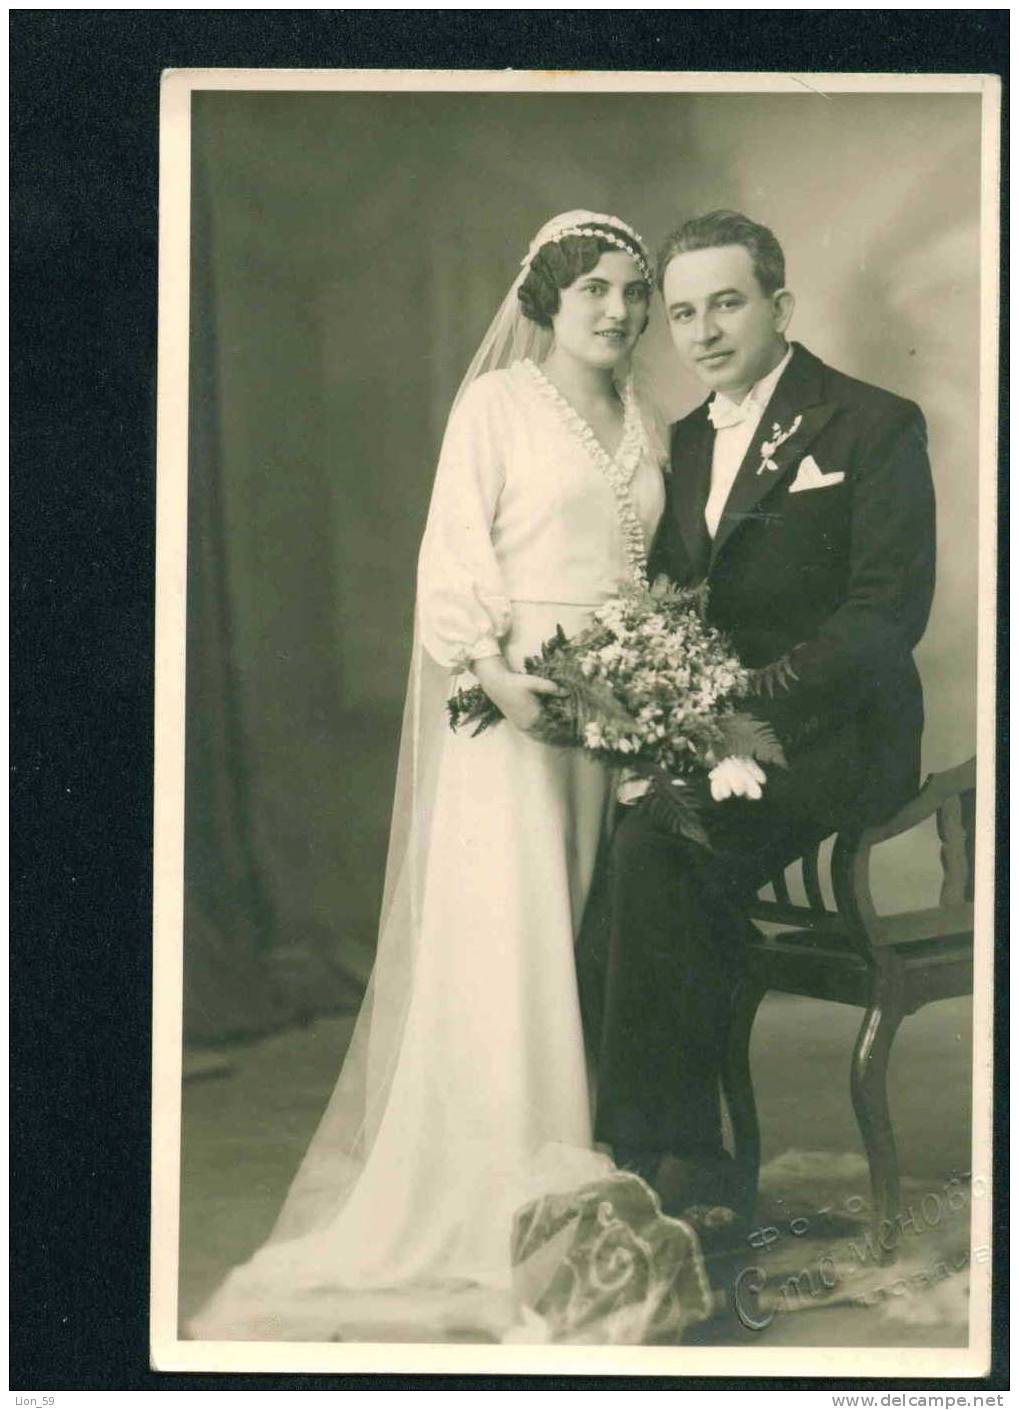 D3078 / Marriages  WEDDING , BRIDE W BRIDEGROOM Bulgaria 1935s Vintage REAL Photo Bulgaria - Marriages